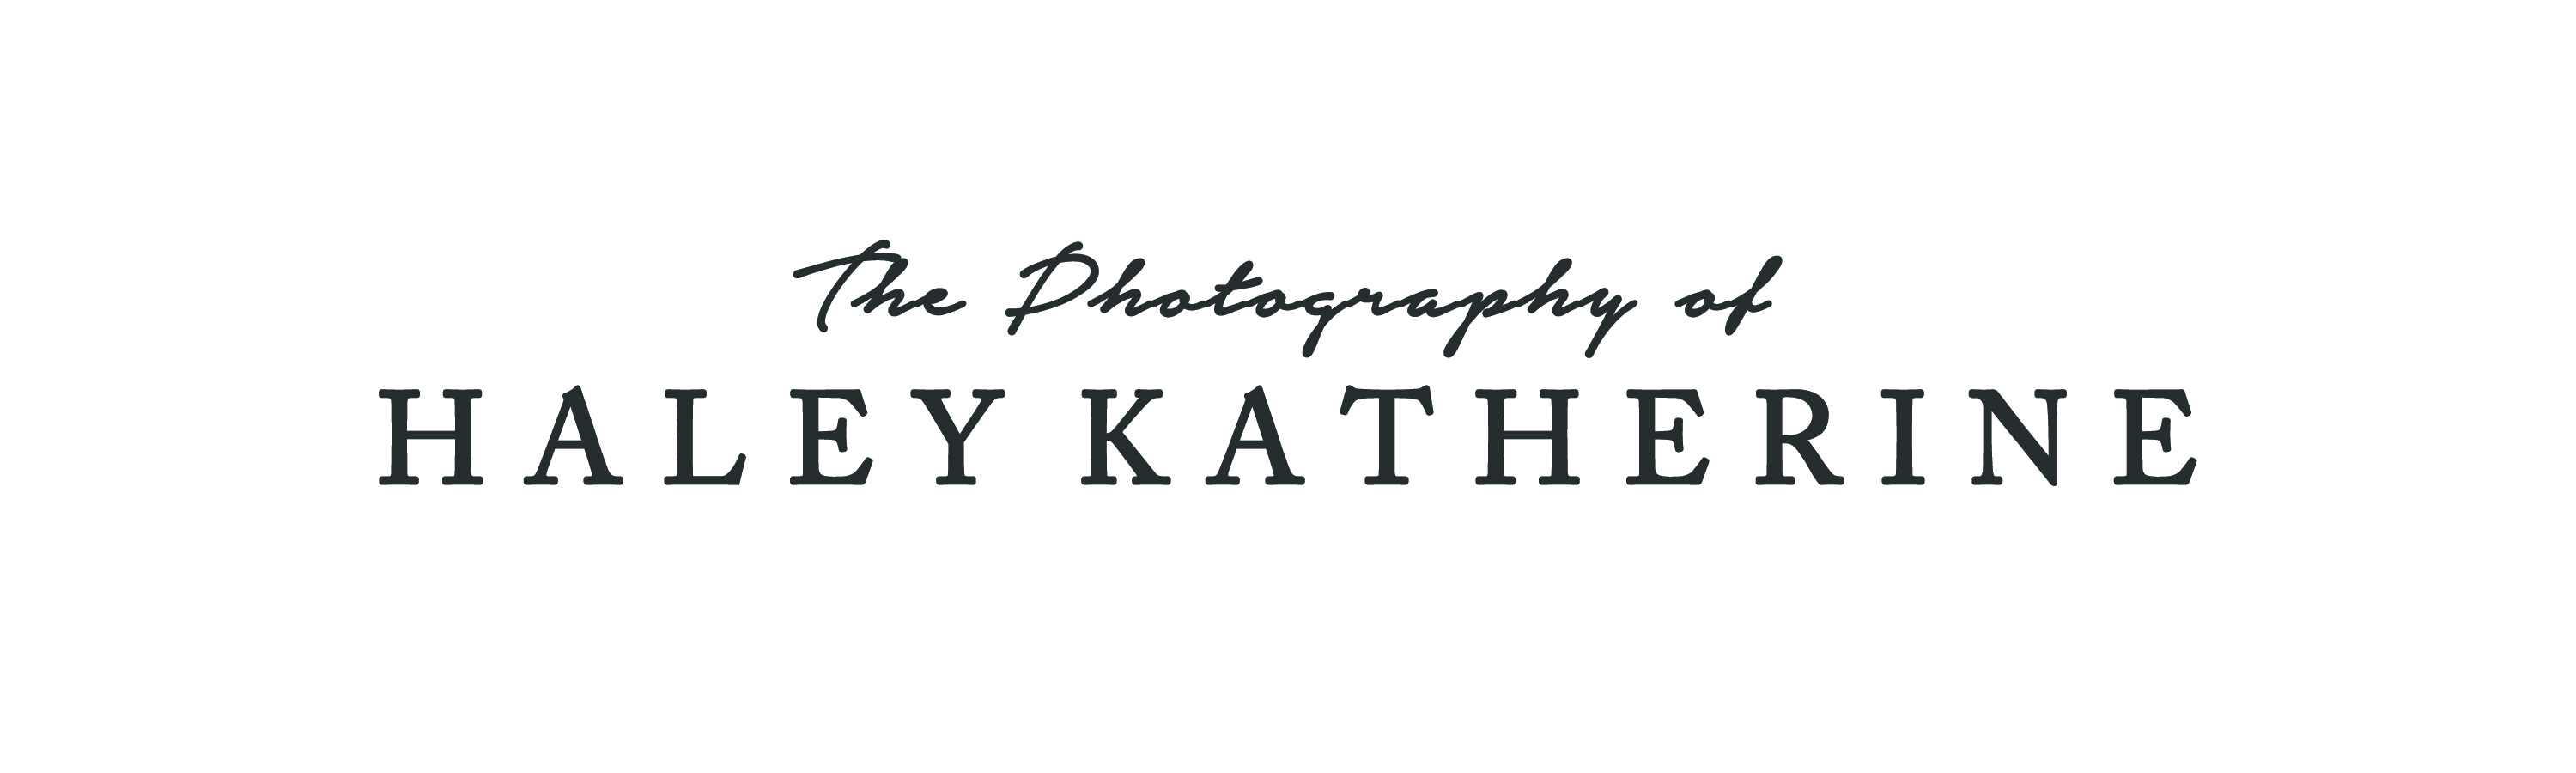 The Photography of Haley Katherine